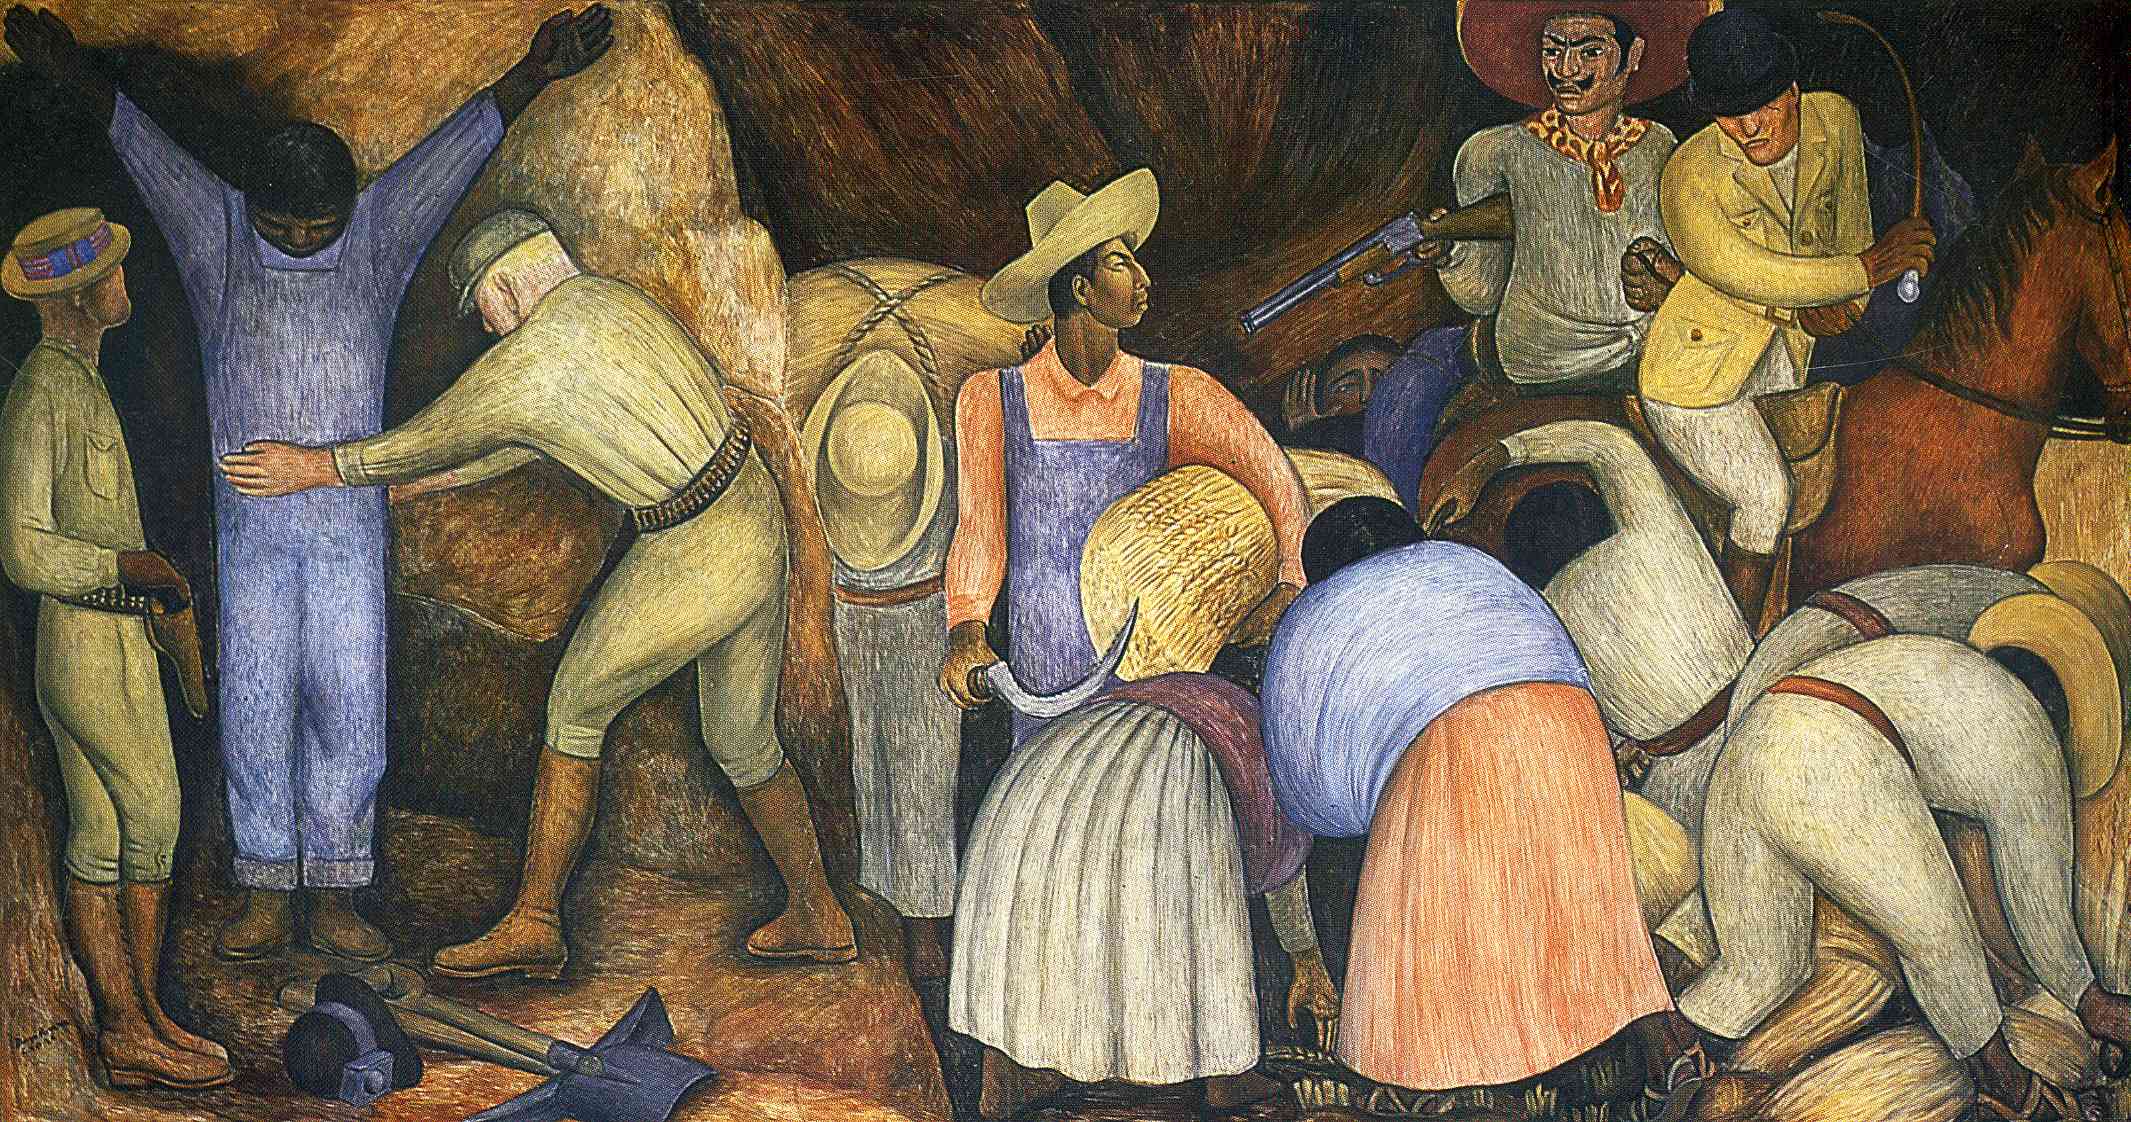 The Exploiters - Diego Rivera - WikiArt.org - encyclopedia of visual arts